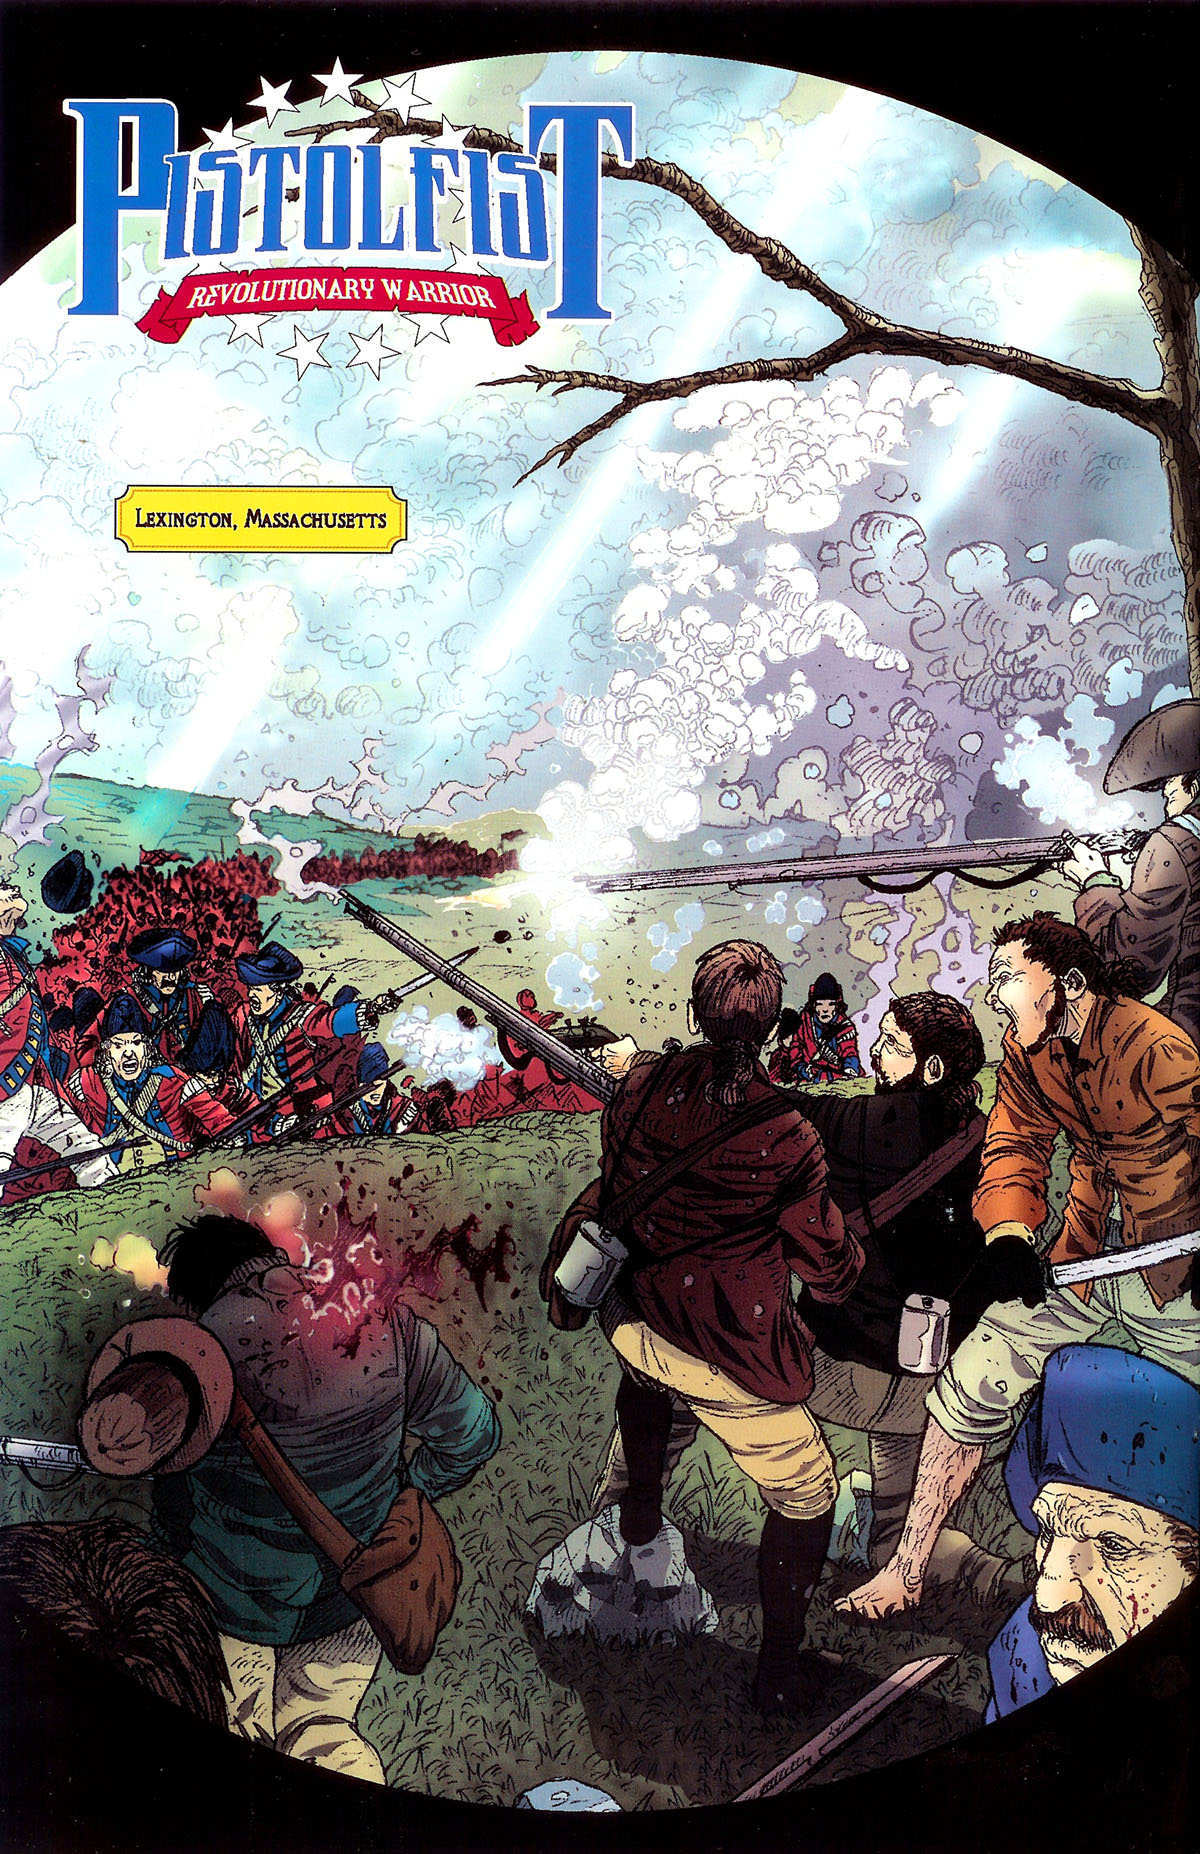 Read online Pistolfist Revolutionary Warrior comic -  Issue #1 - 4